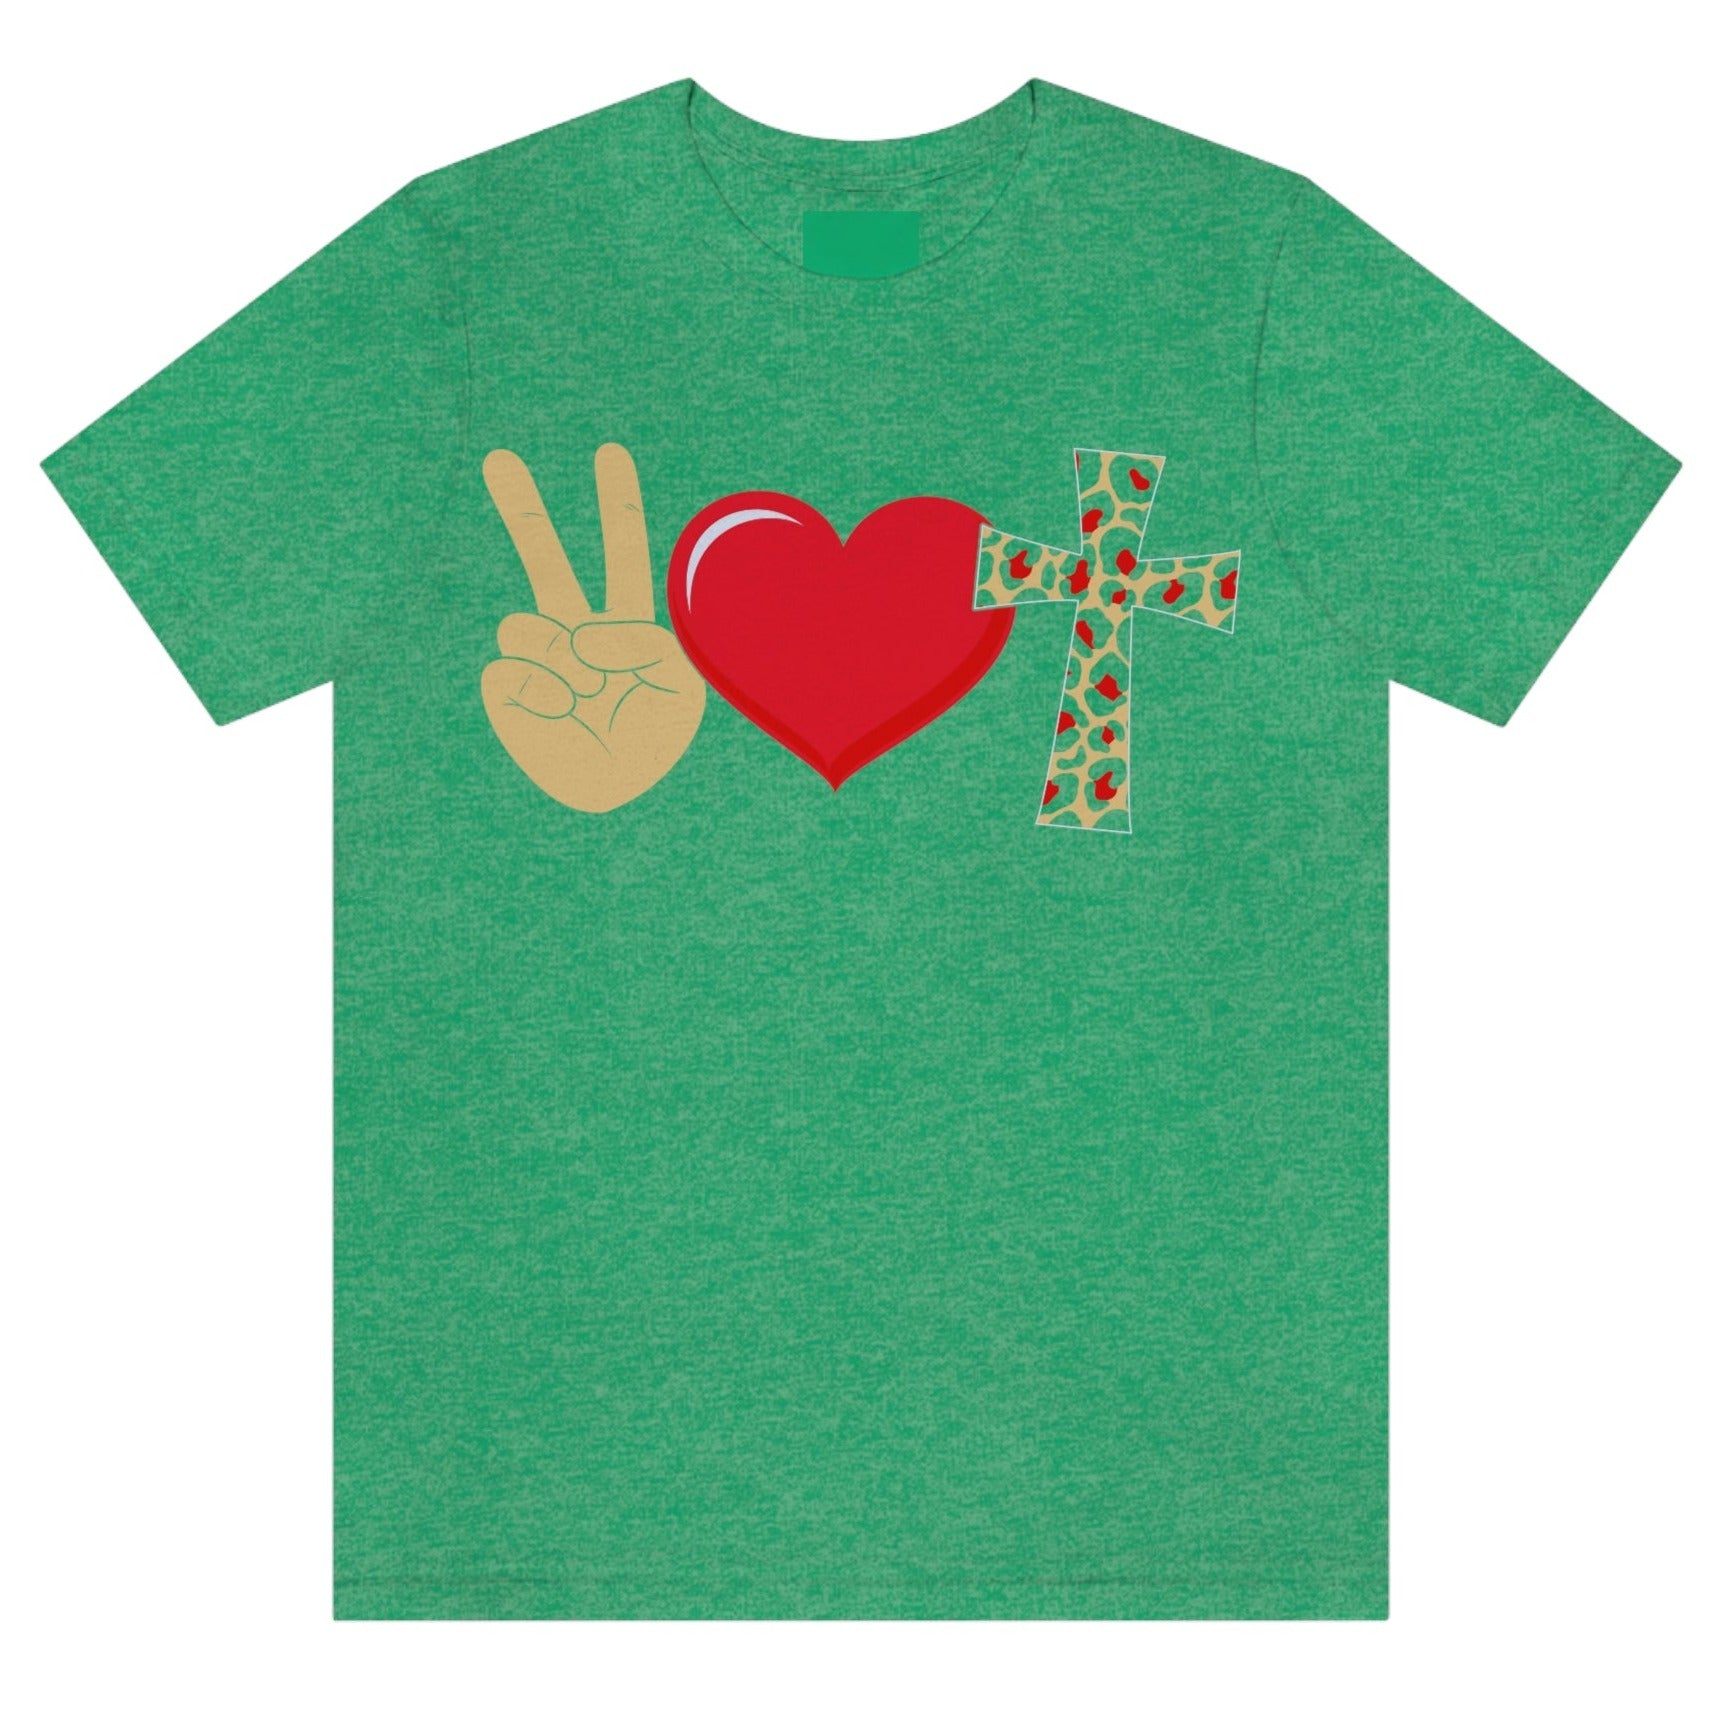 peace-love-jesus-heathered-kelly-t-shirt-religious-inspiring